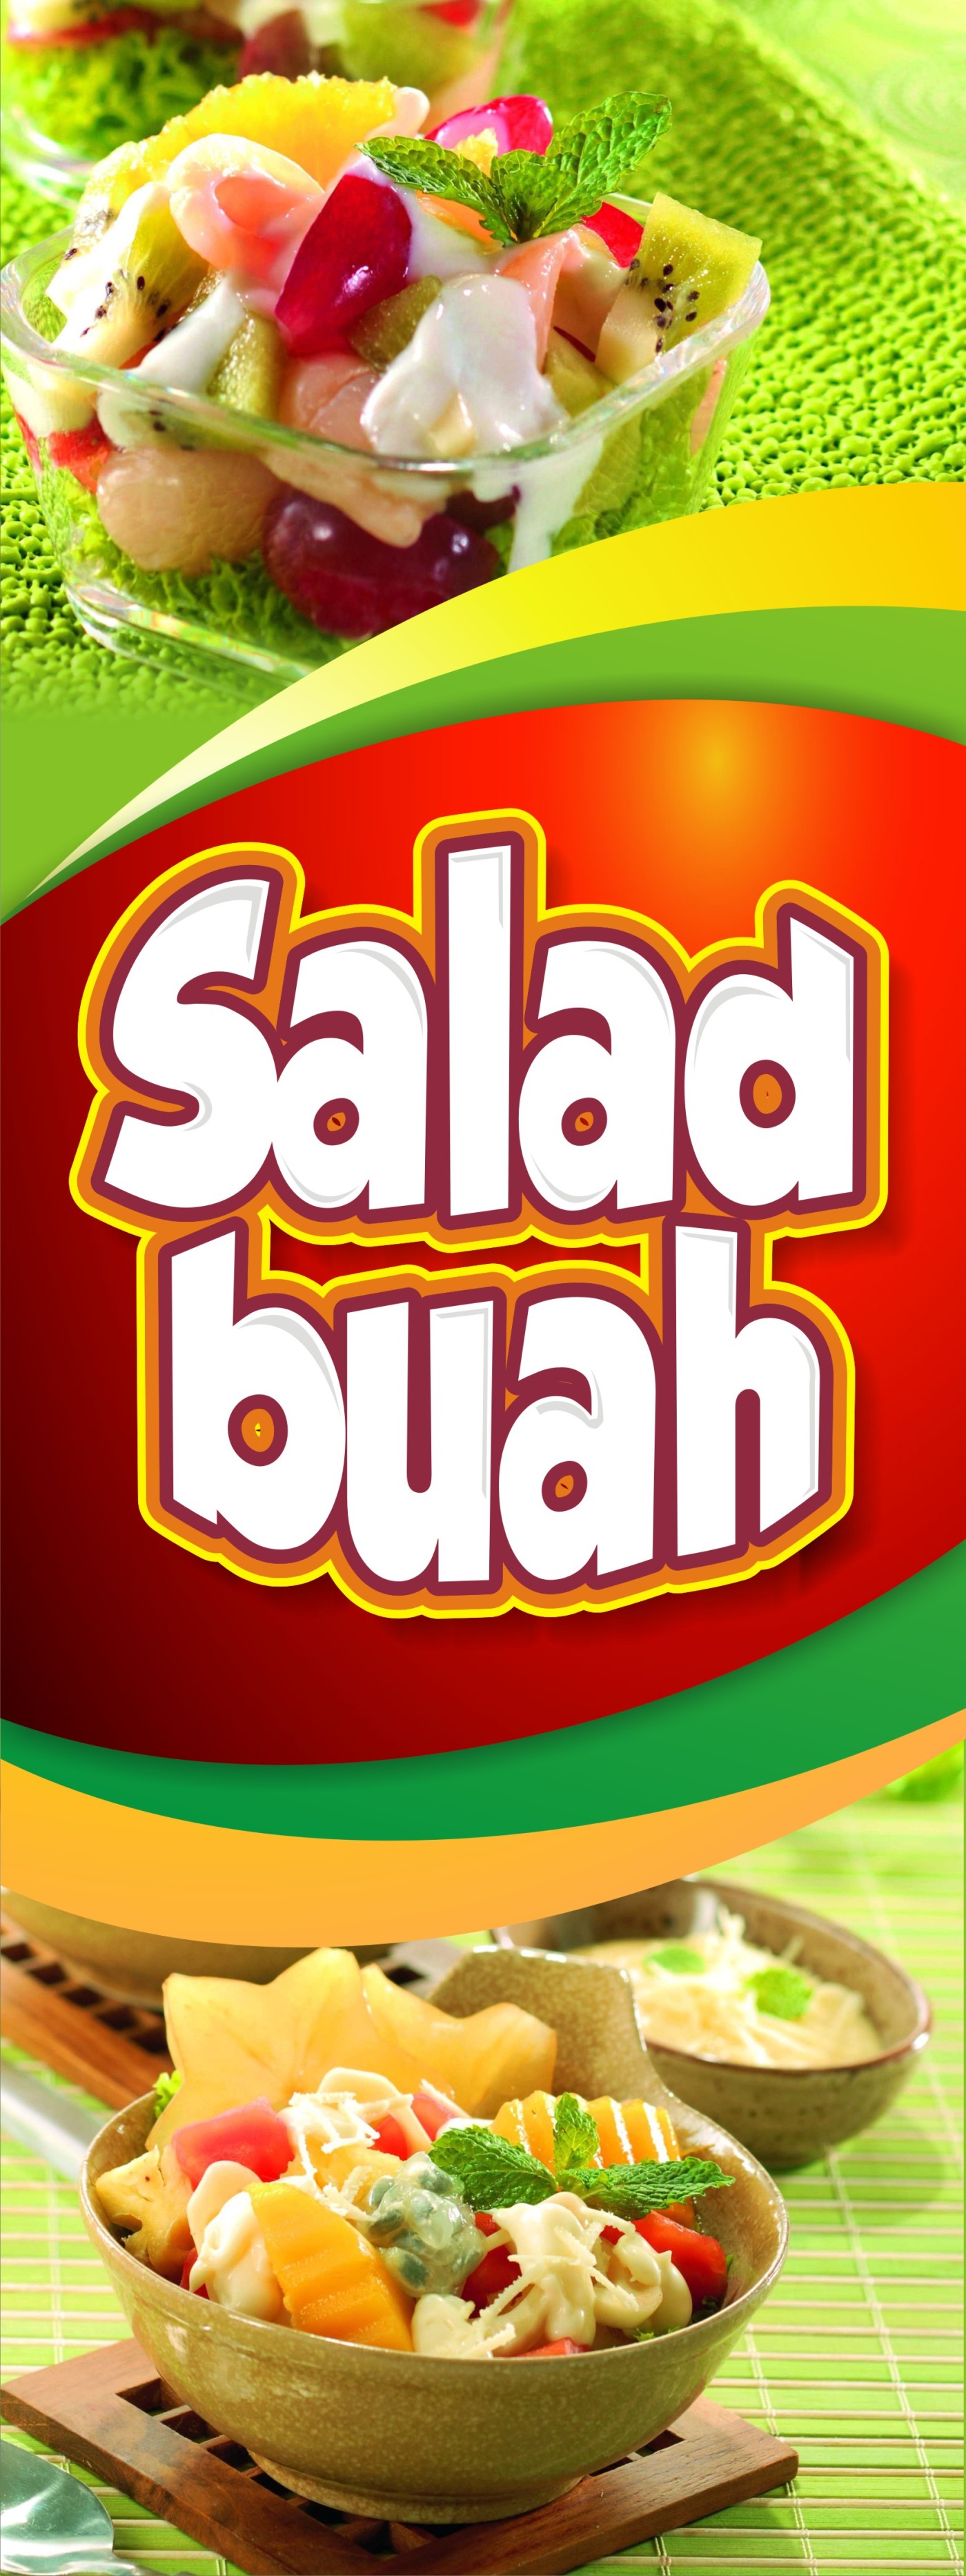 Desain Banner Salad Buah Kumpulan Gambar Spanduk